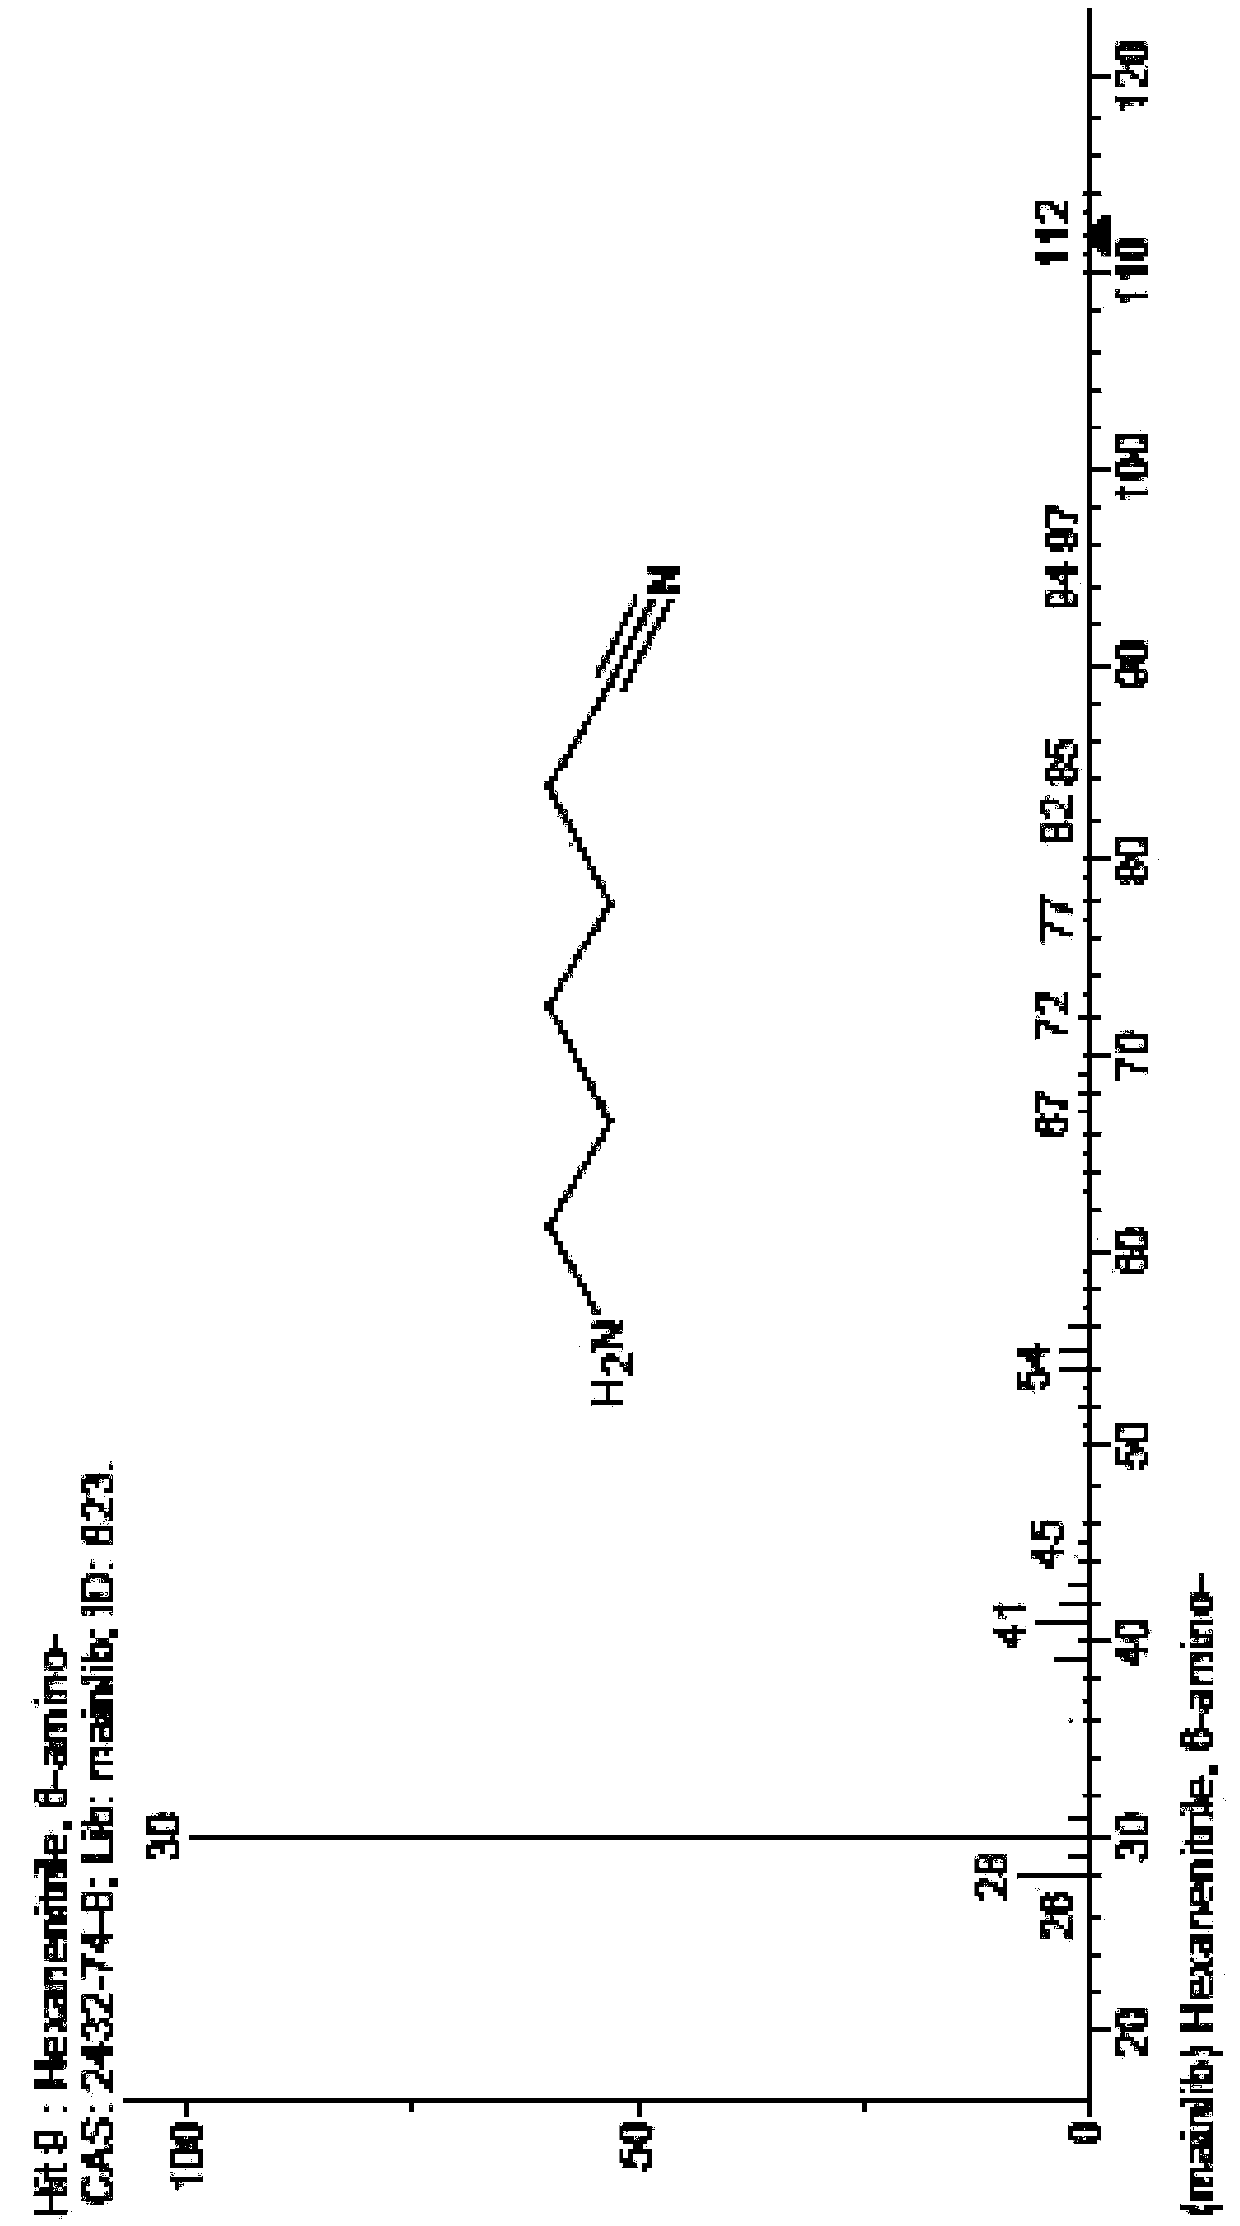 Method and device for preparing 6-amino-capronitrile with caprolactam liquid phase method